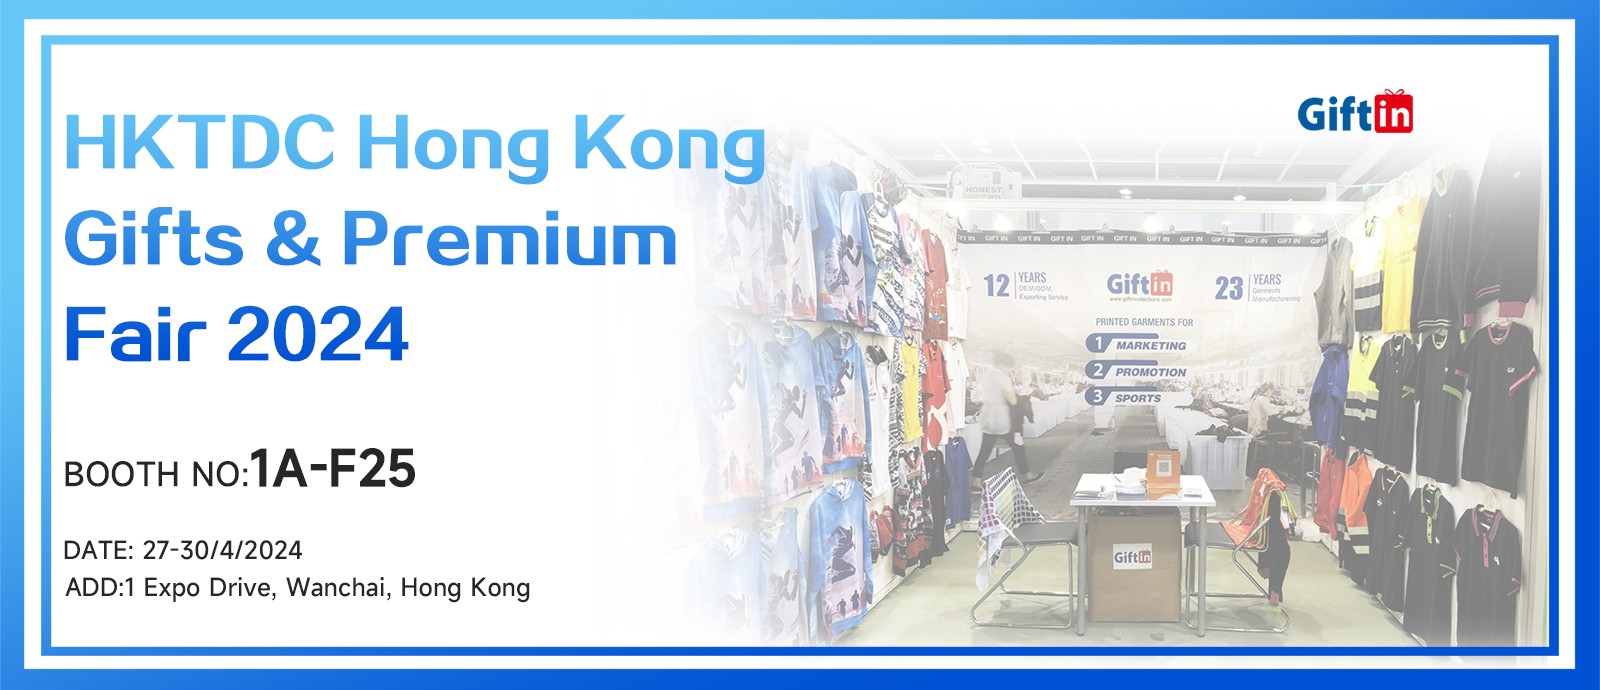 2024 HKDTC Hong Kong Gift & Premium Fair